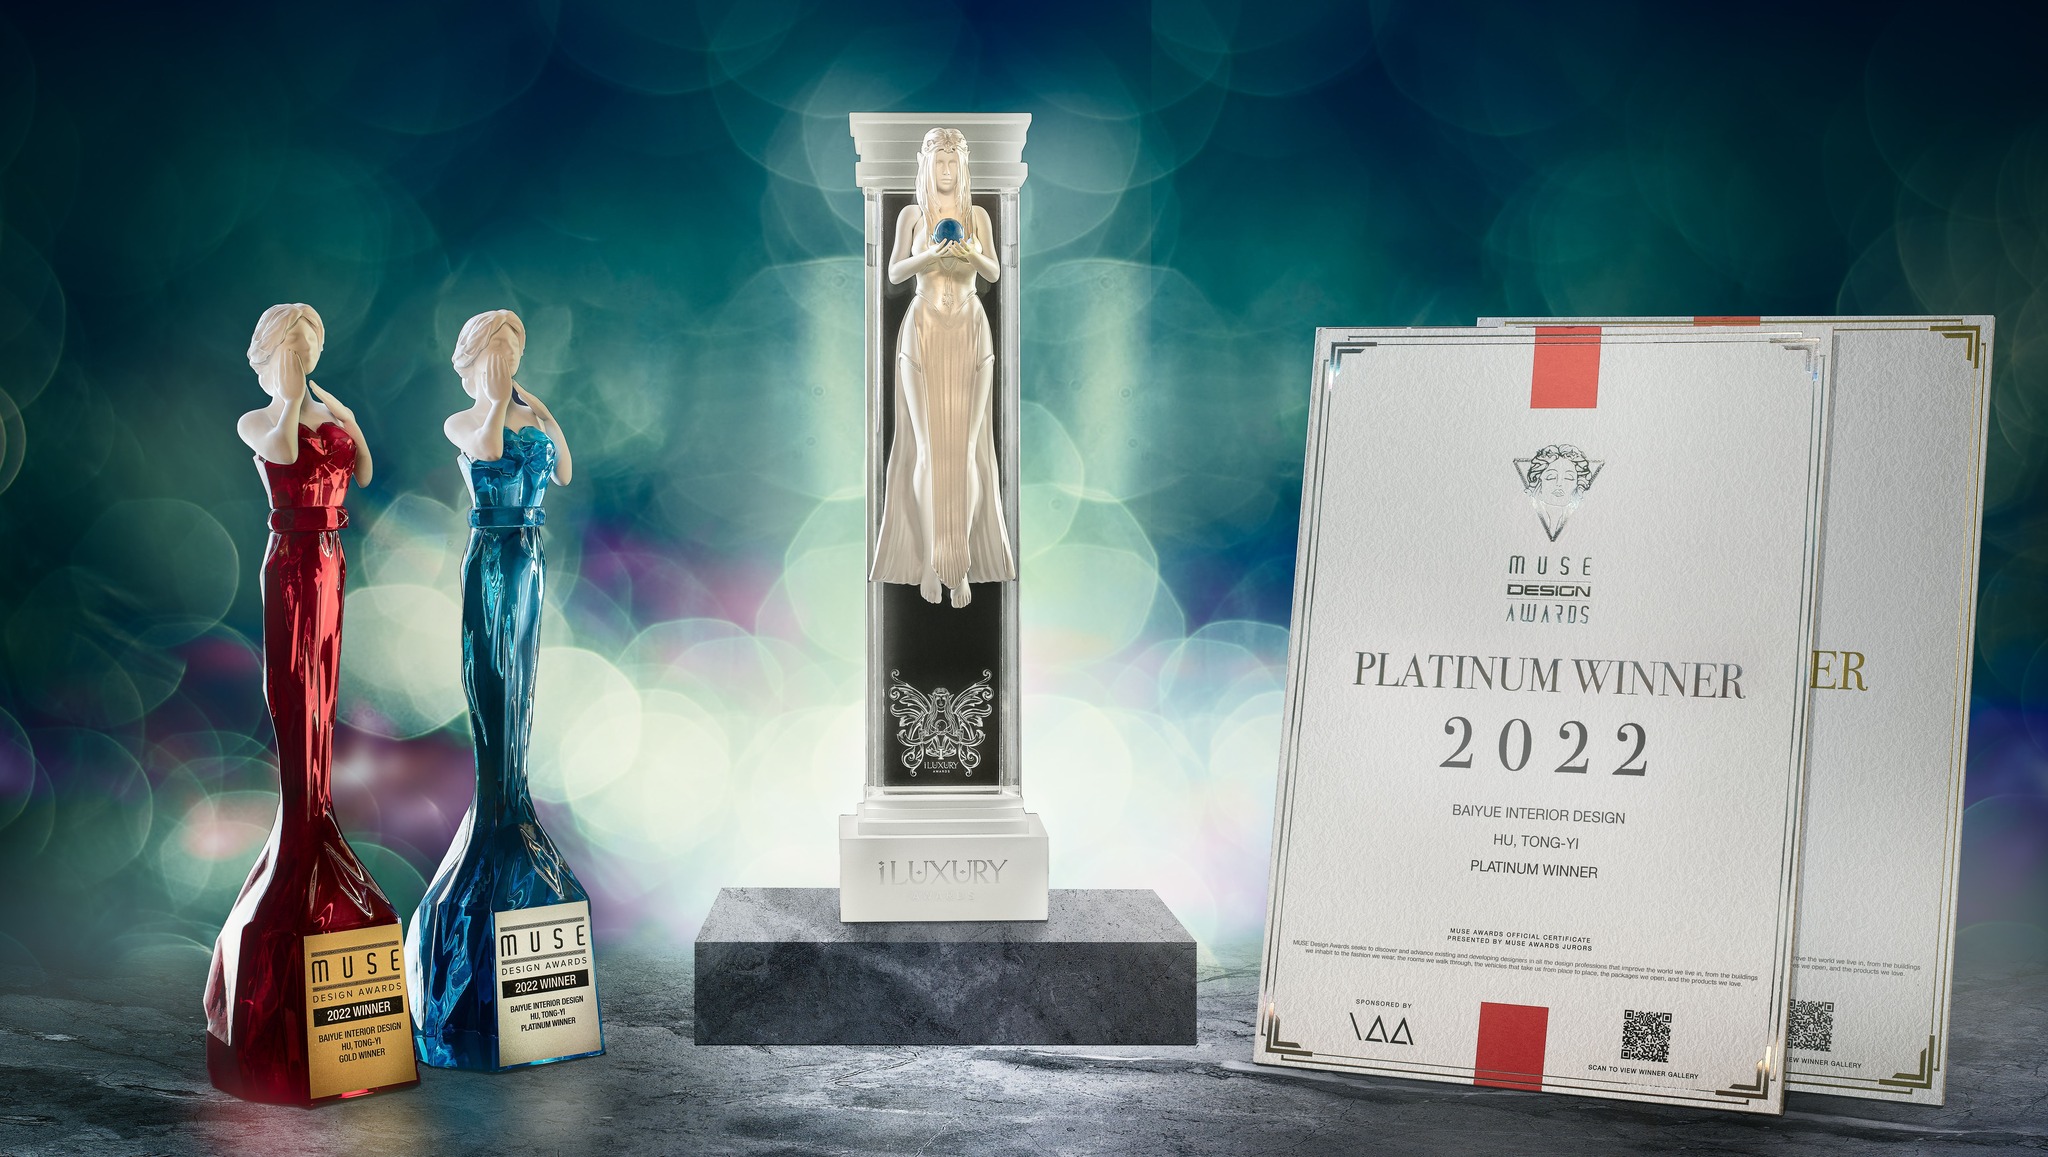 MUSE Design Awards Winner - The goddess trophy has finally arrived!